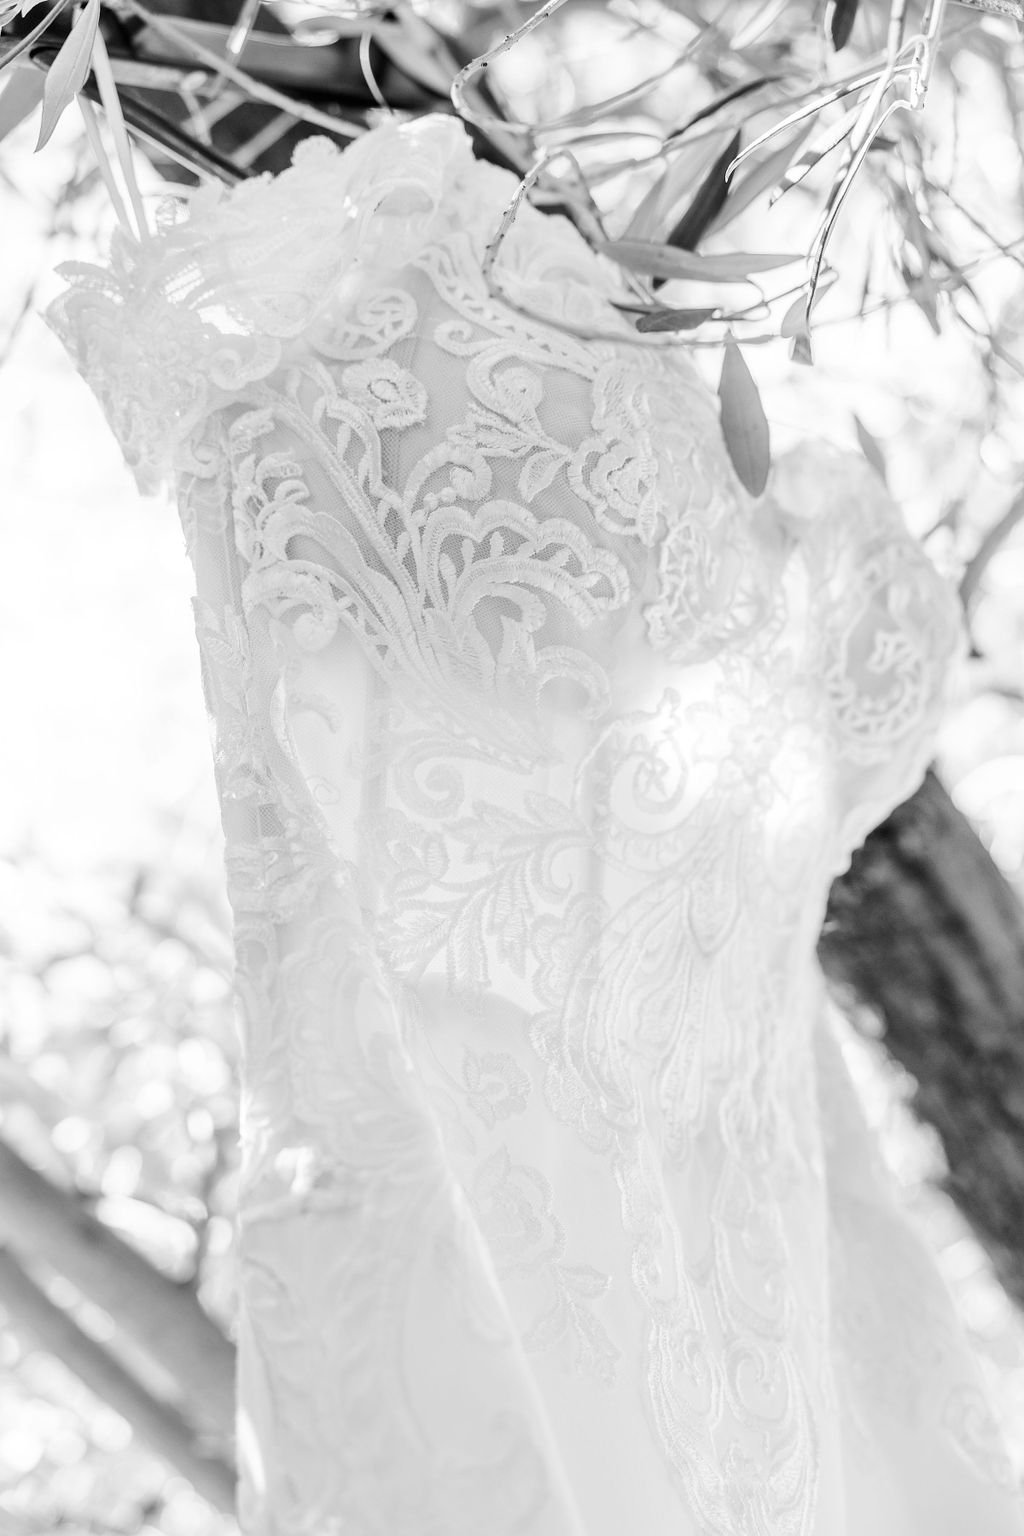 www.santabarbarawedding.com | Events by Fran | Kelsey Rinaldi | Spanish Hills Club | Casa Blanca Flowers | Lili Bridal | Bride’s Wedding Gown Hanging Up